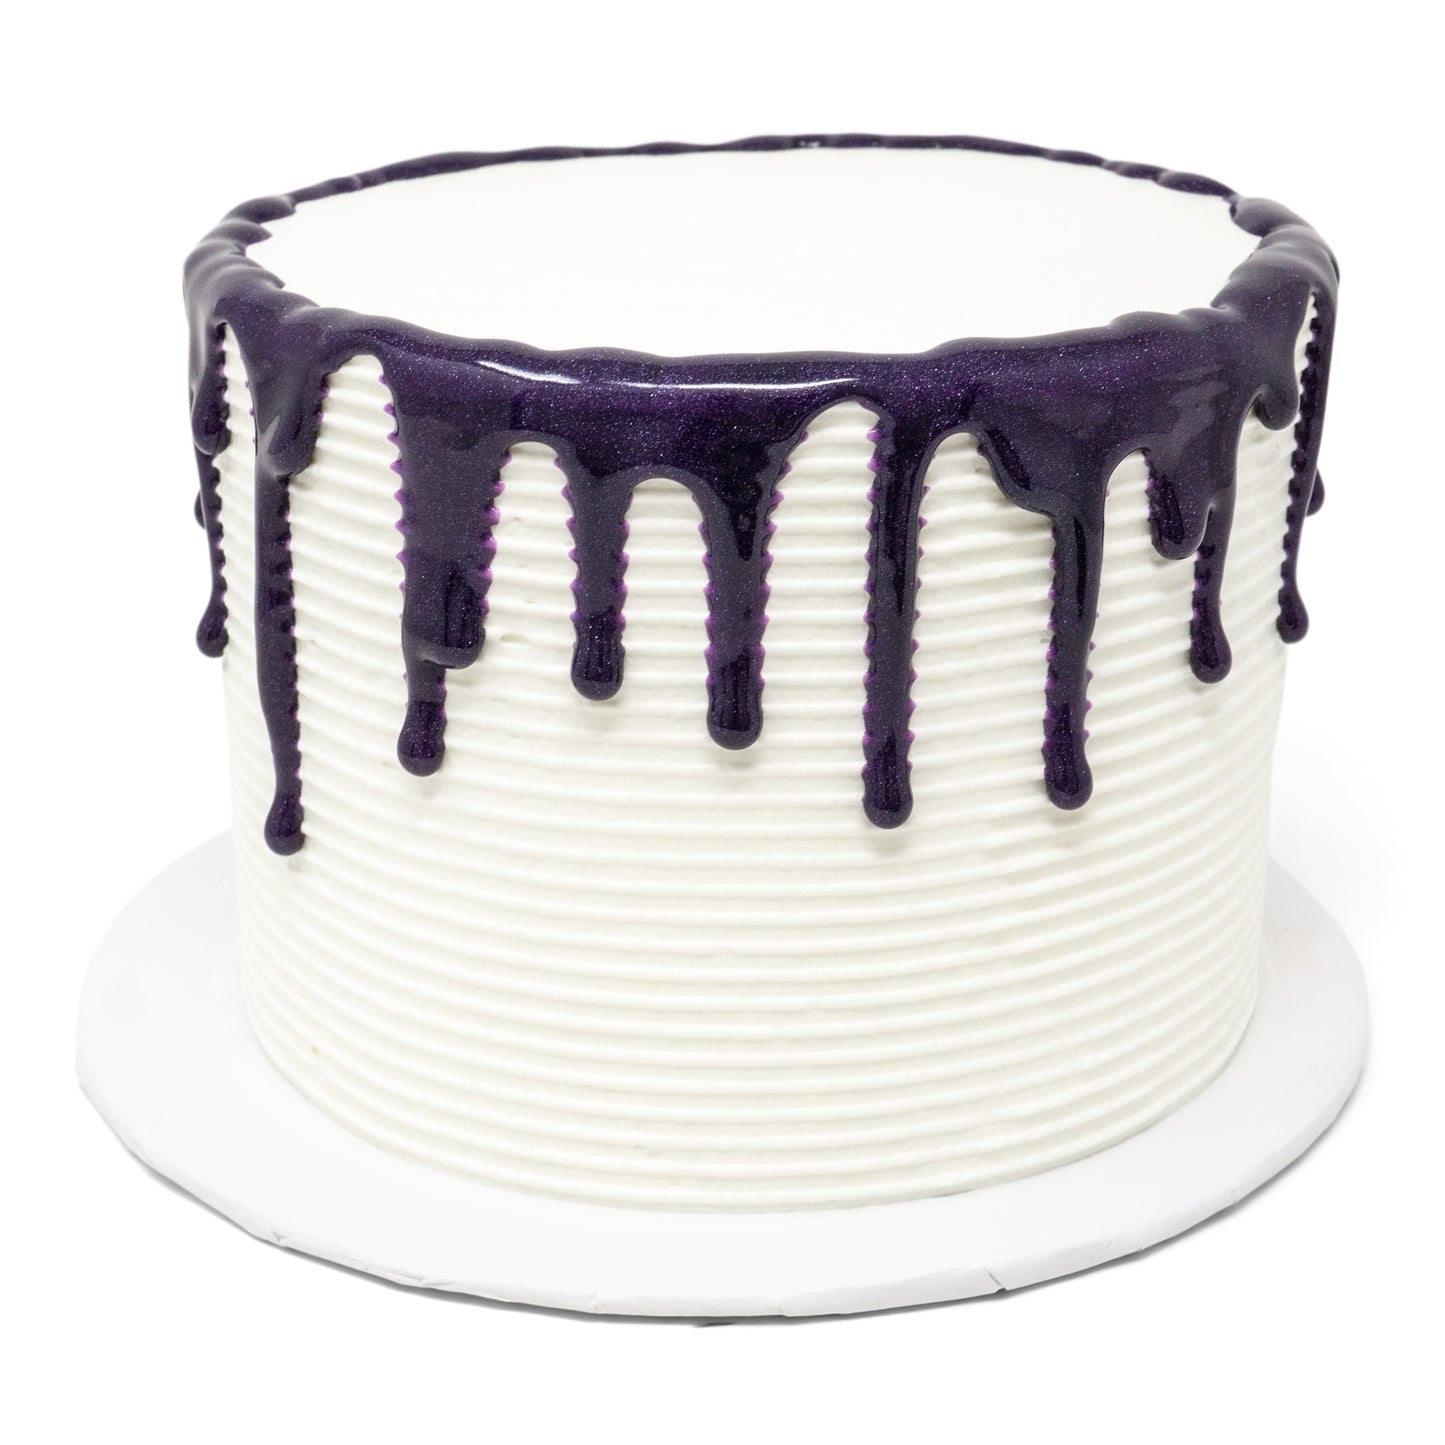 Combed Drip Cake